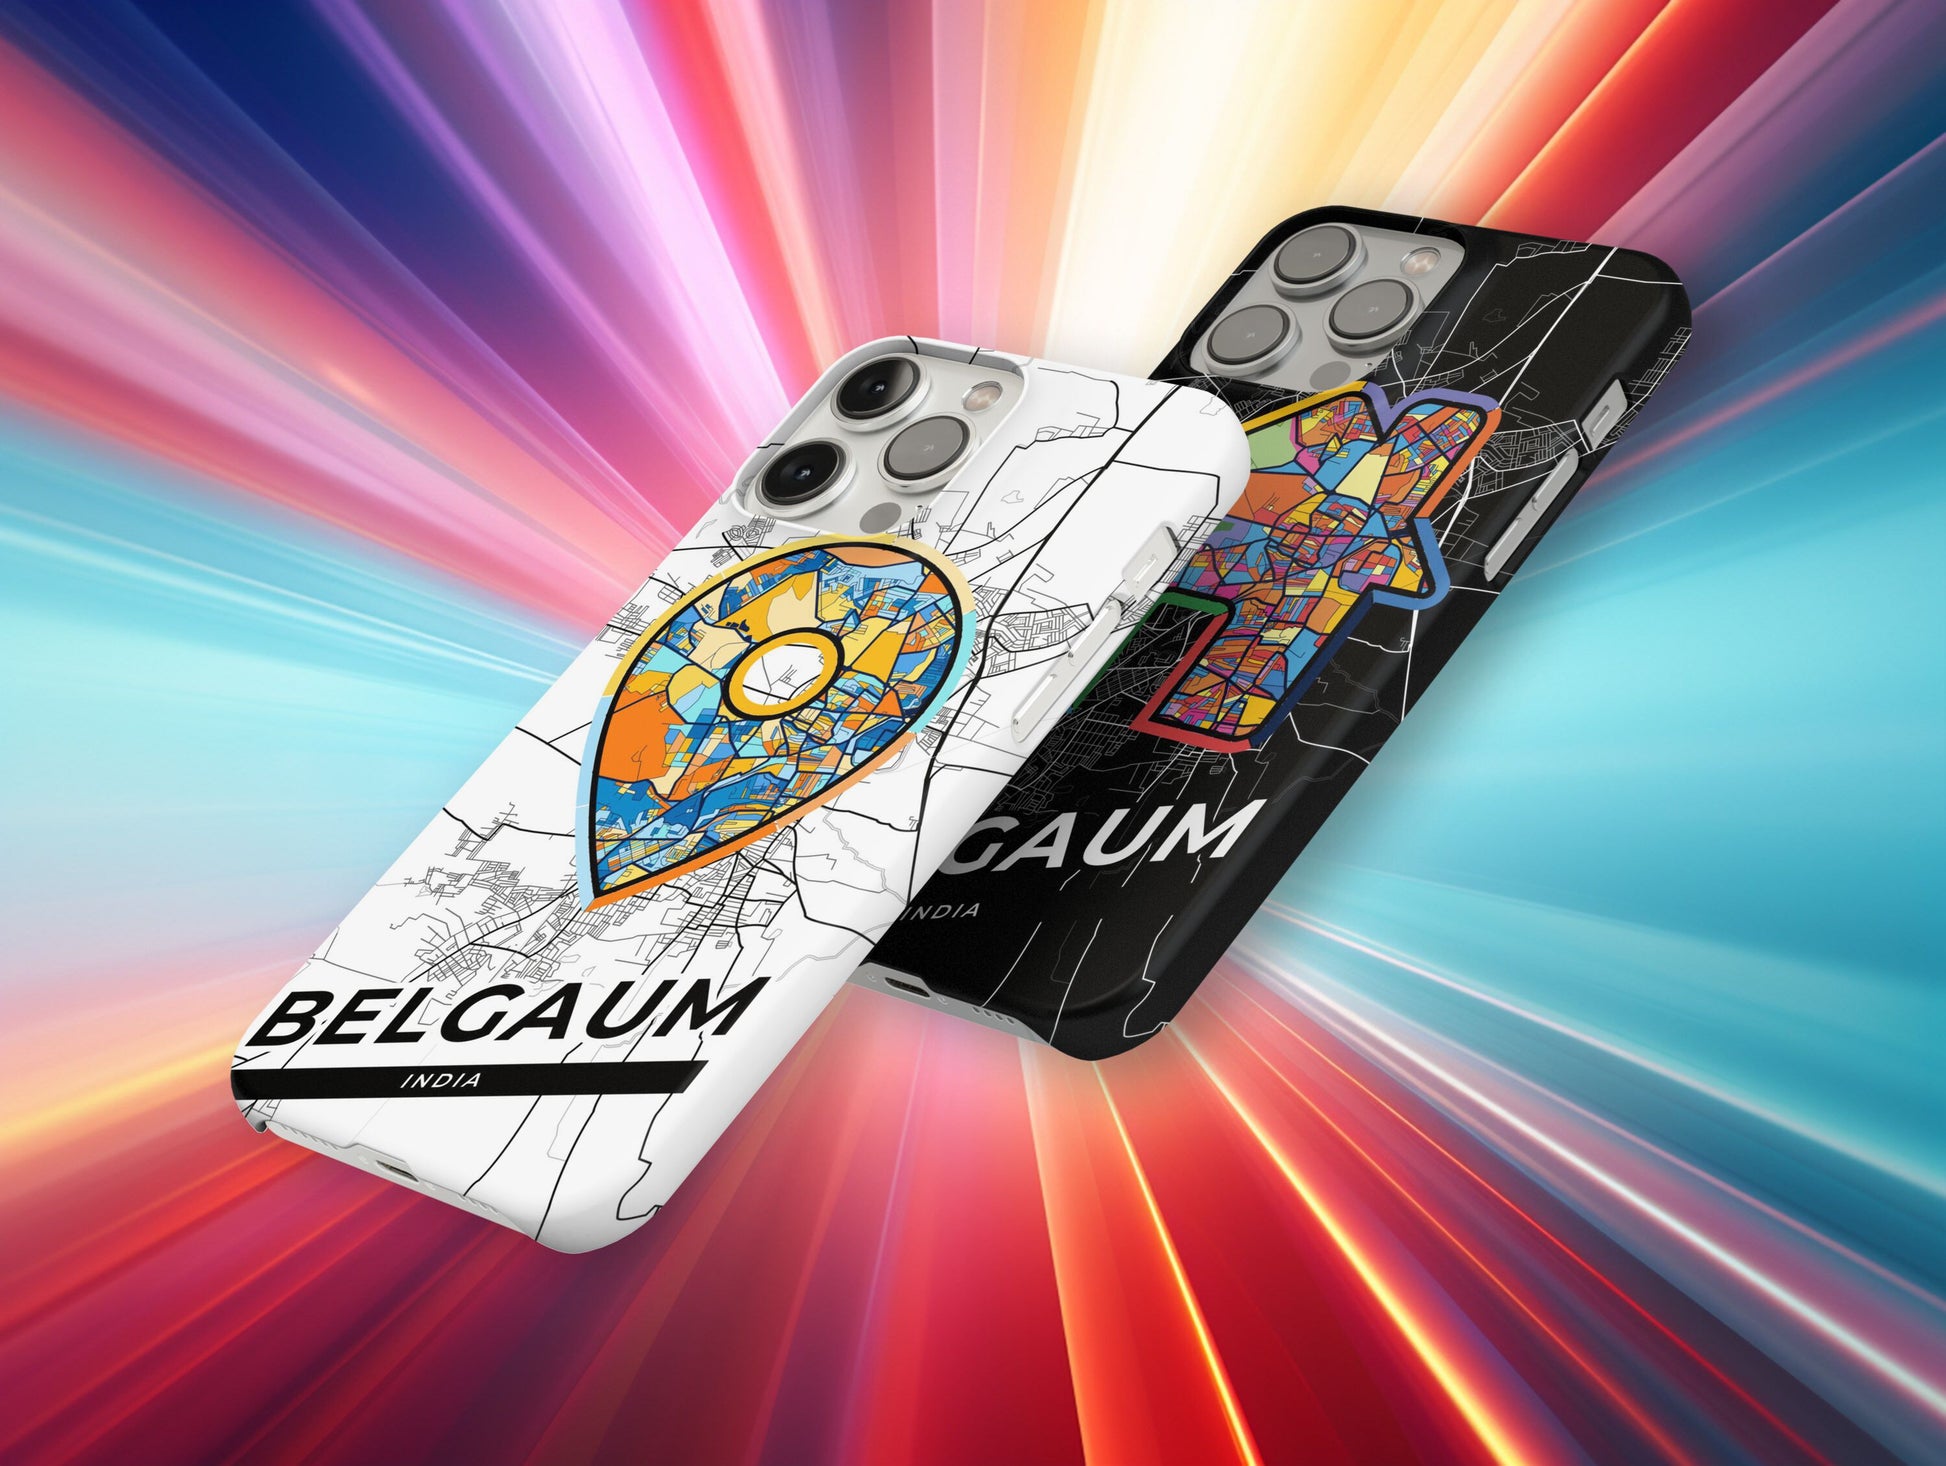 Belgaum India slim phone case with colorful icon. Birthday, wedding or housewarming gift. Couple match cases.